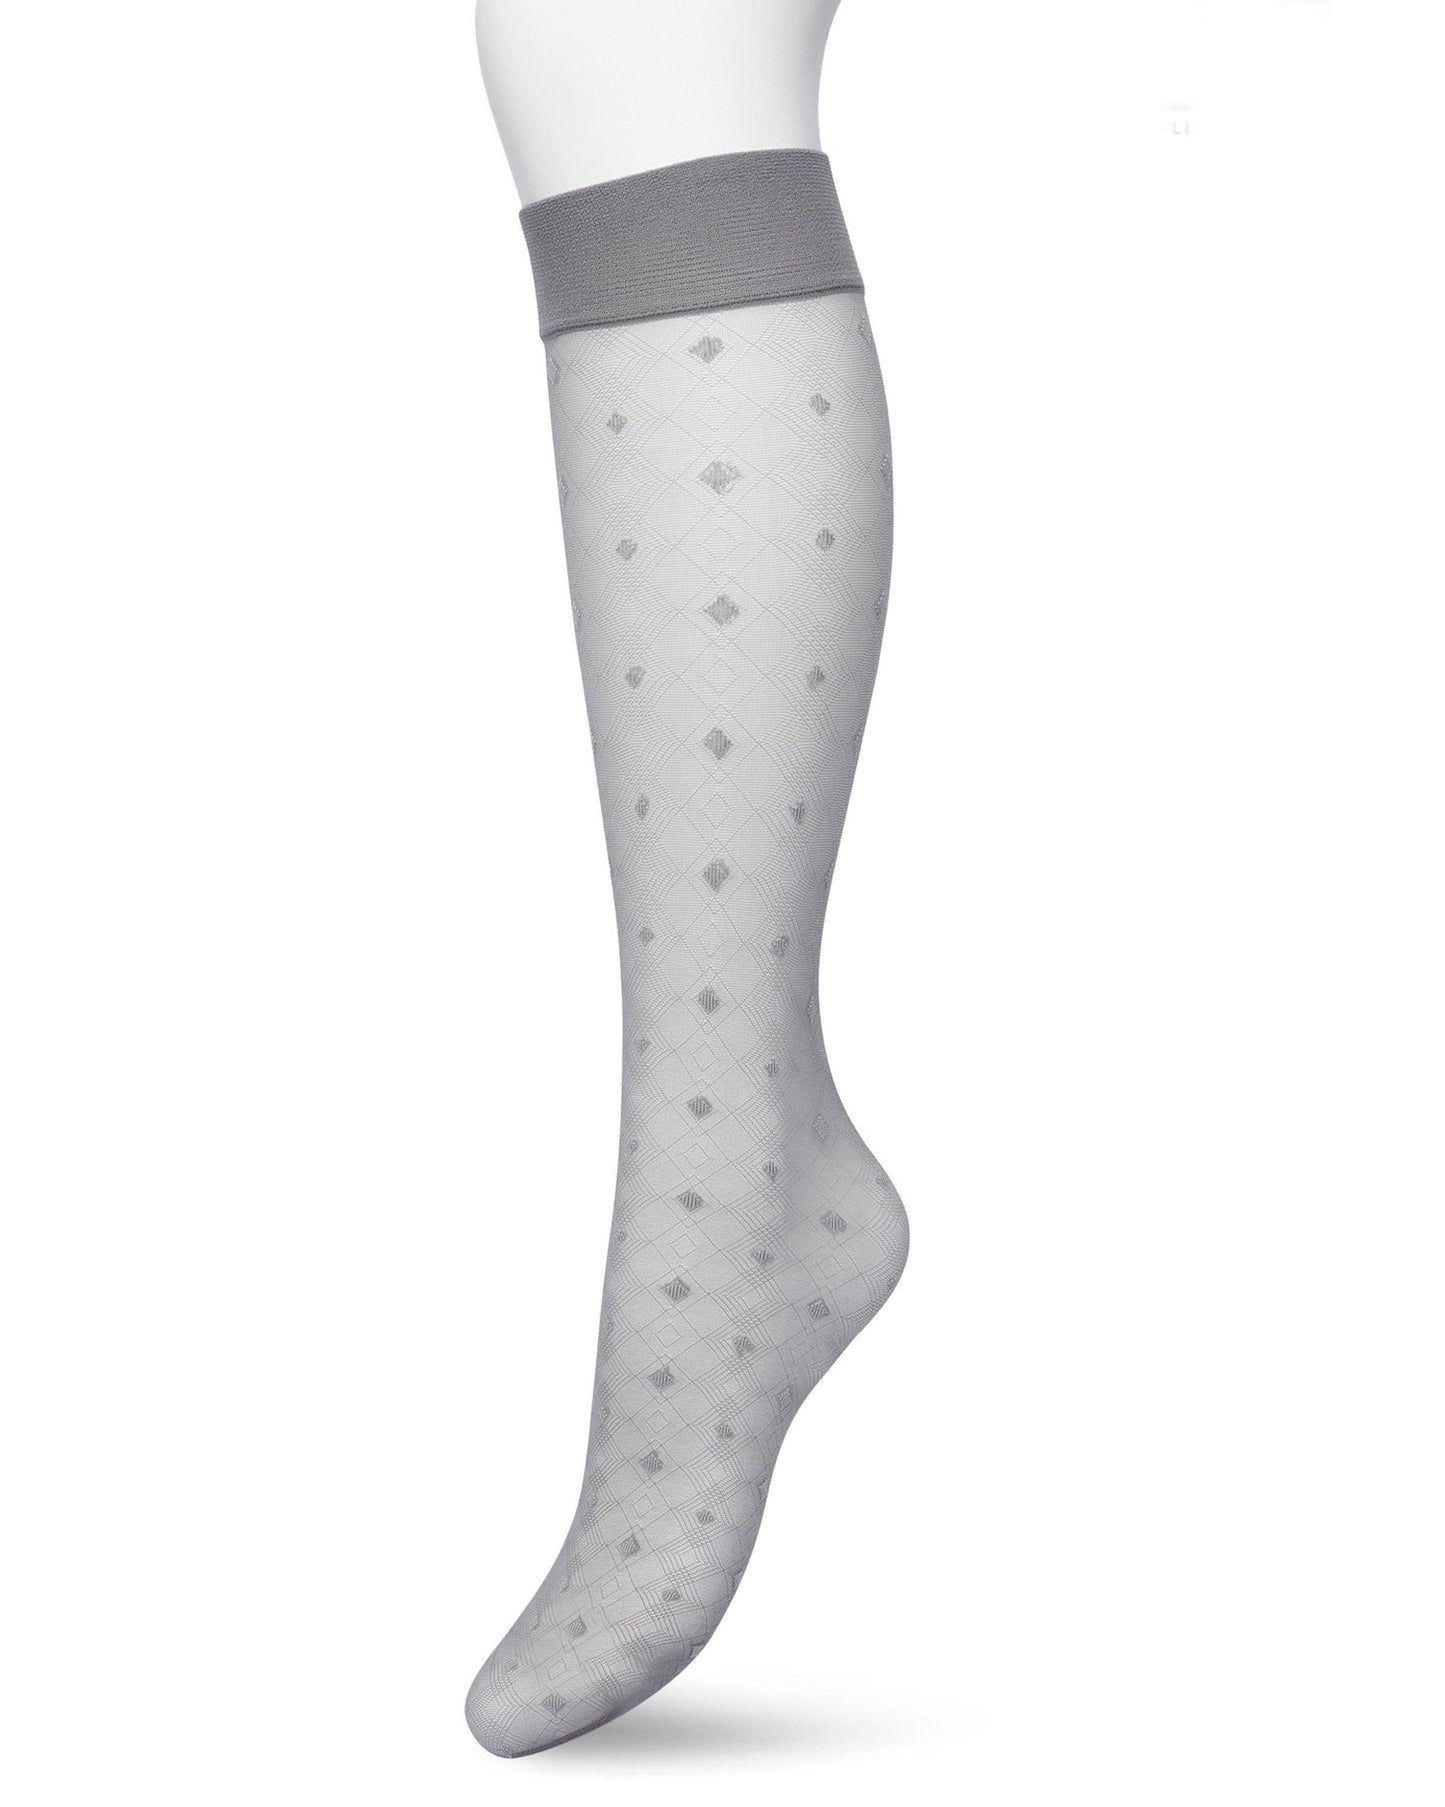 Bonnie Doon Geometric Knee-Highs - Sheer light grey fashion knee-high socks with a geometric linear diamond pattern with opaque dotted diamonds and deep elasticated comfort cuff